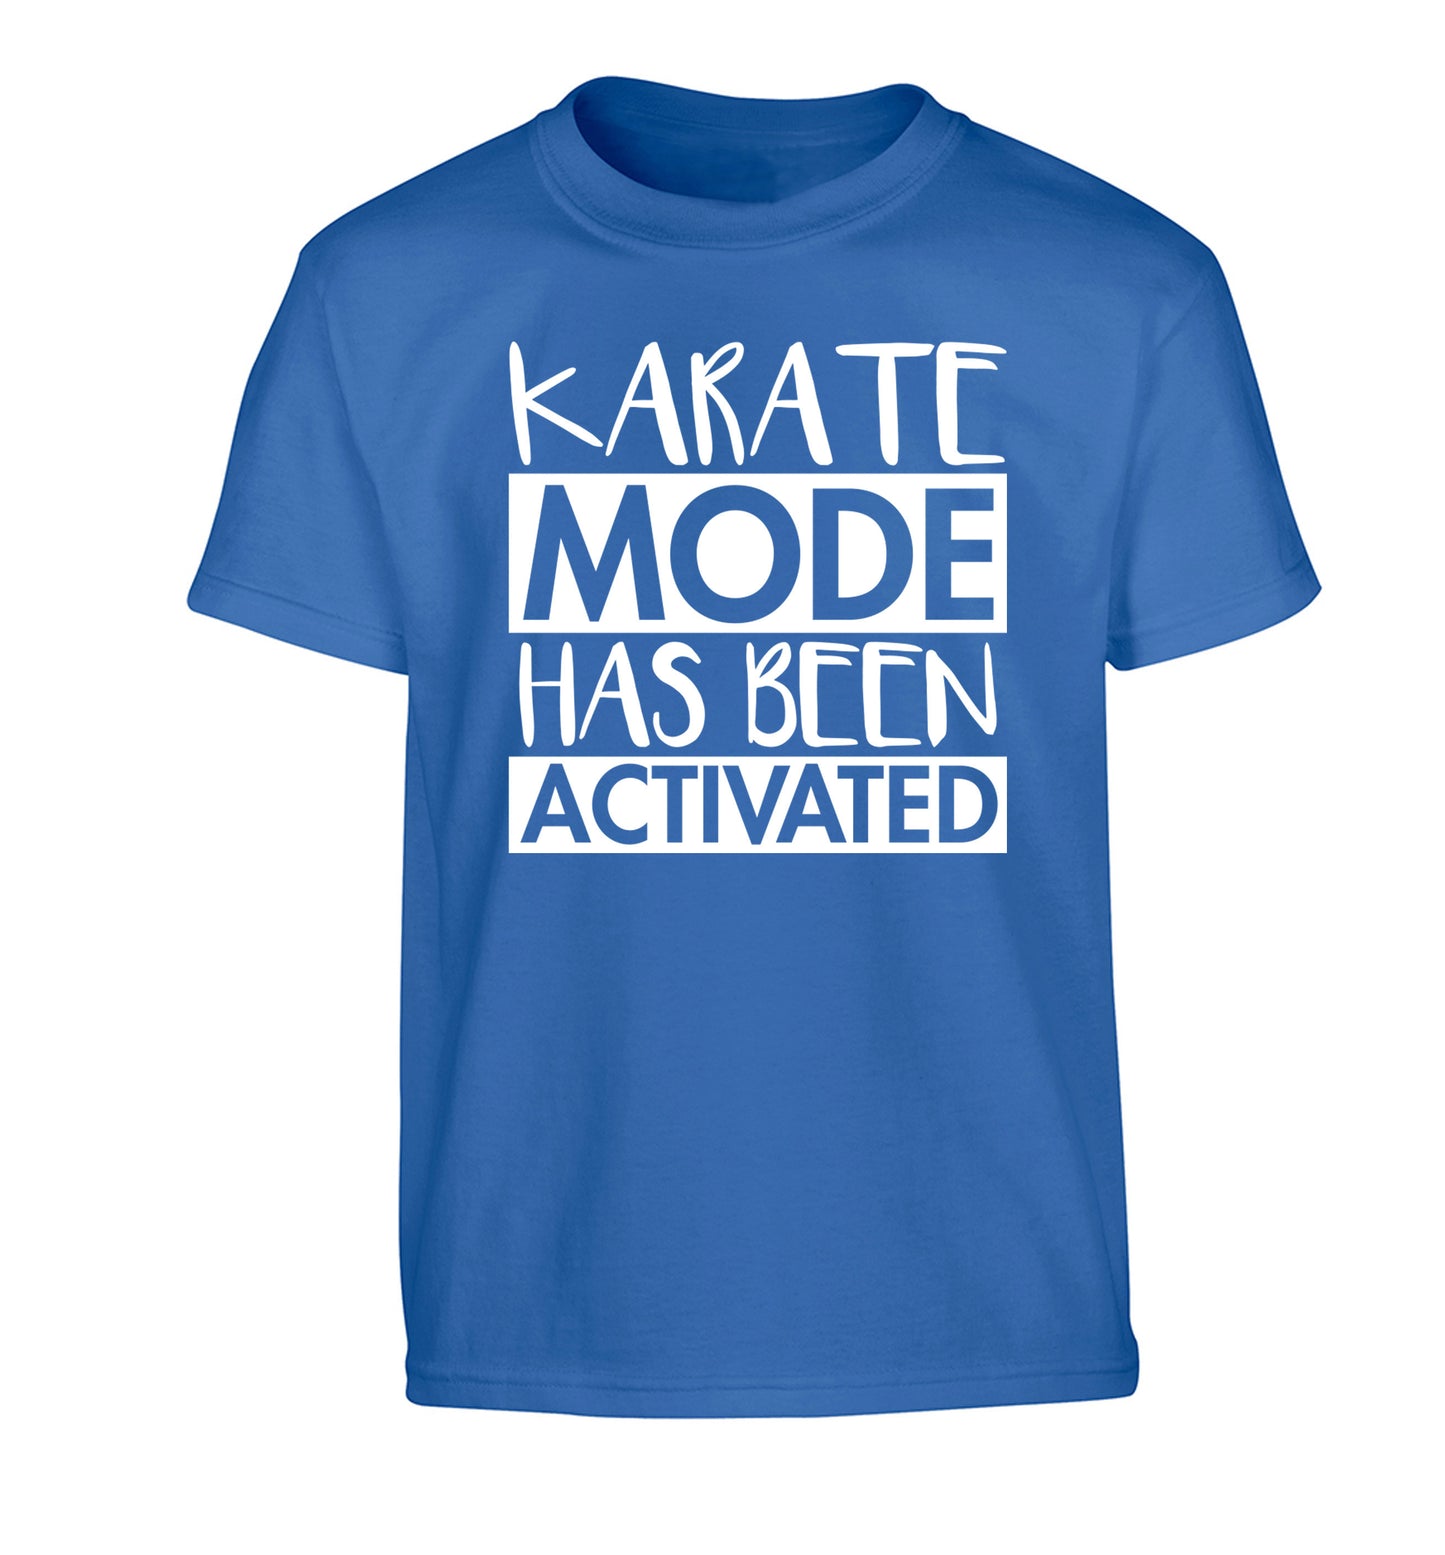 Karate mode activated Children's blue Tshirt 12-14 Years